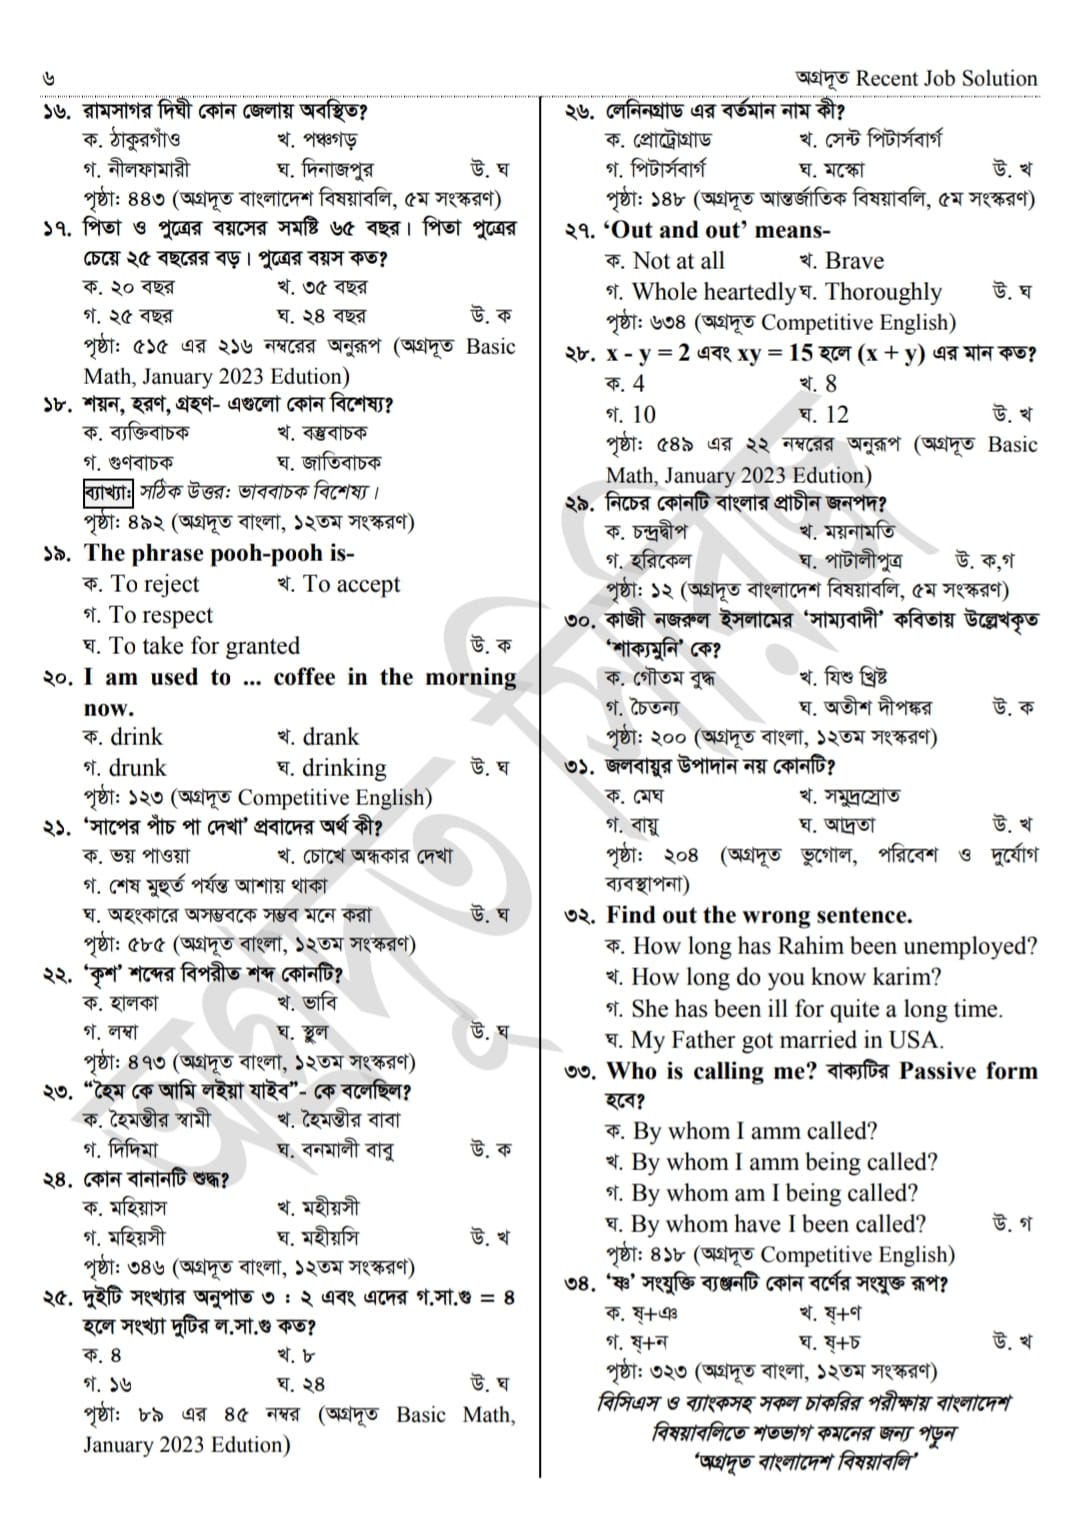 LGED exam question solution 2023 pdf [ Karjo sohokari 100% correct answers] -  এলজিইডি কার্য সহকারী প্রশ্ন সমাধান ২০২৩ (2)